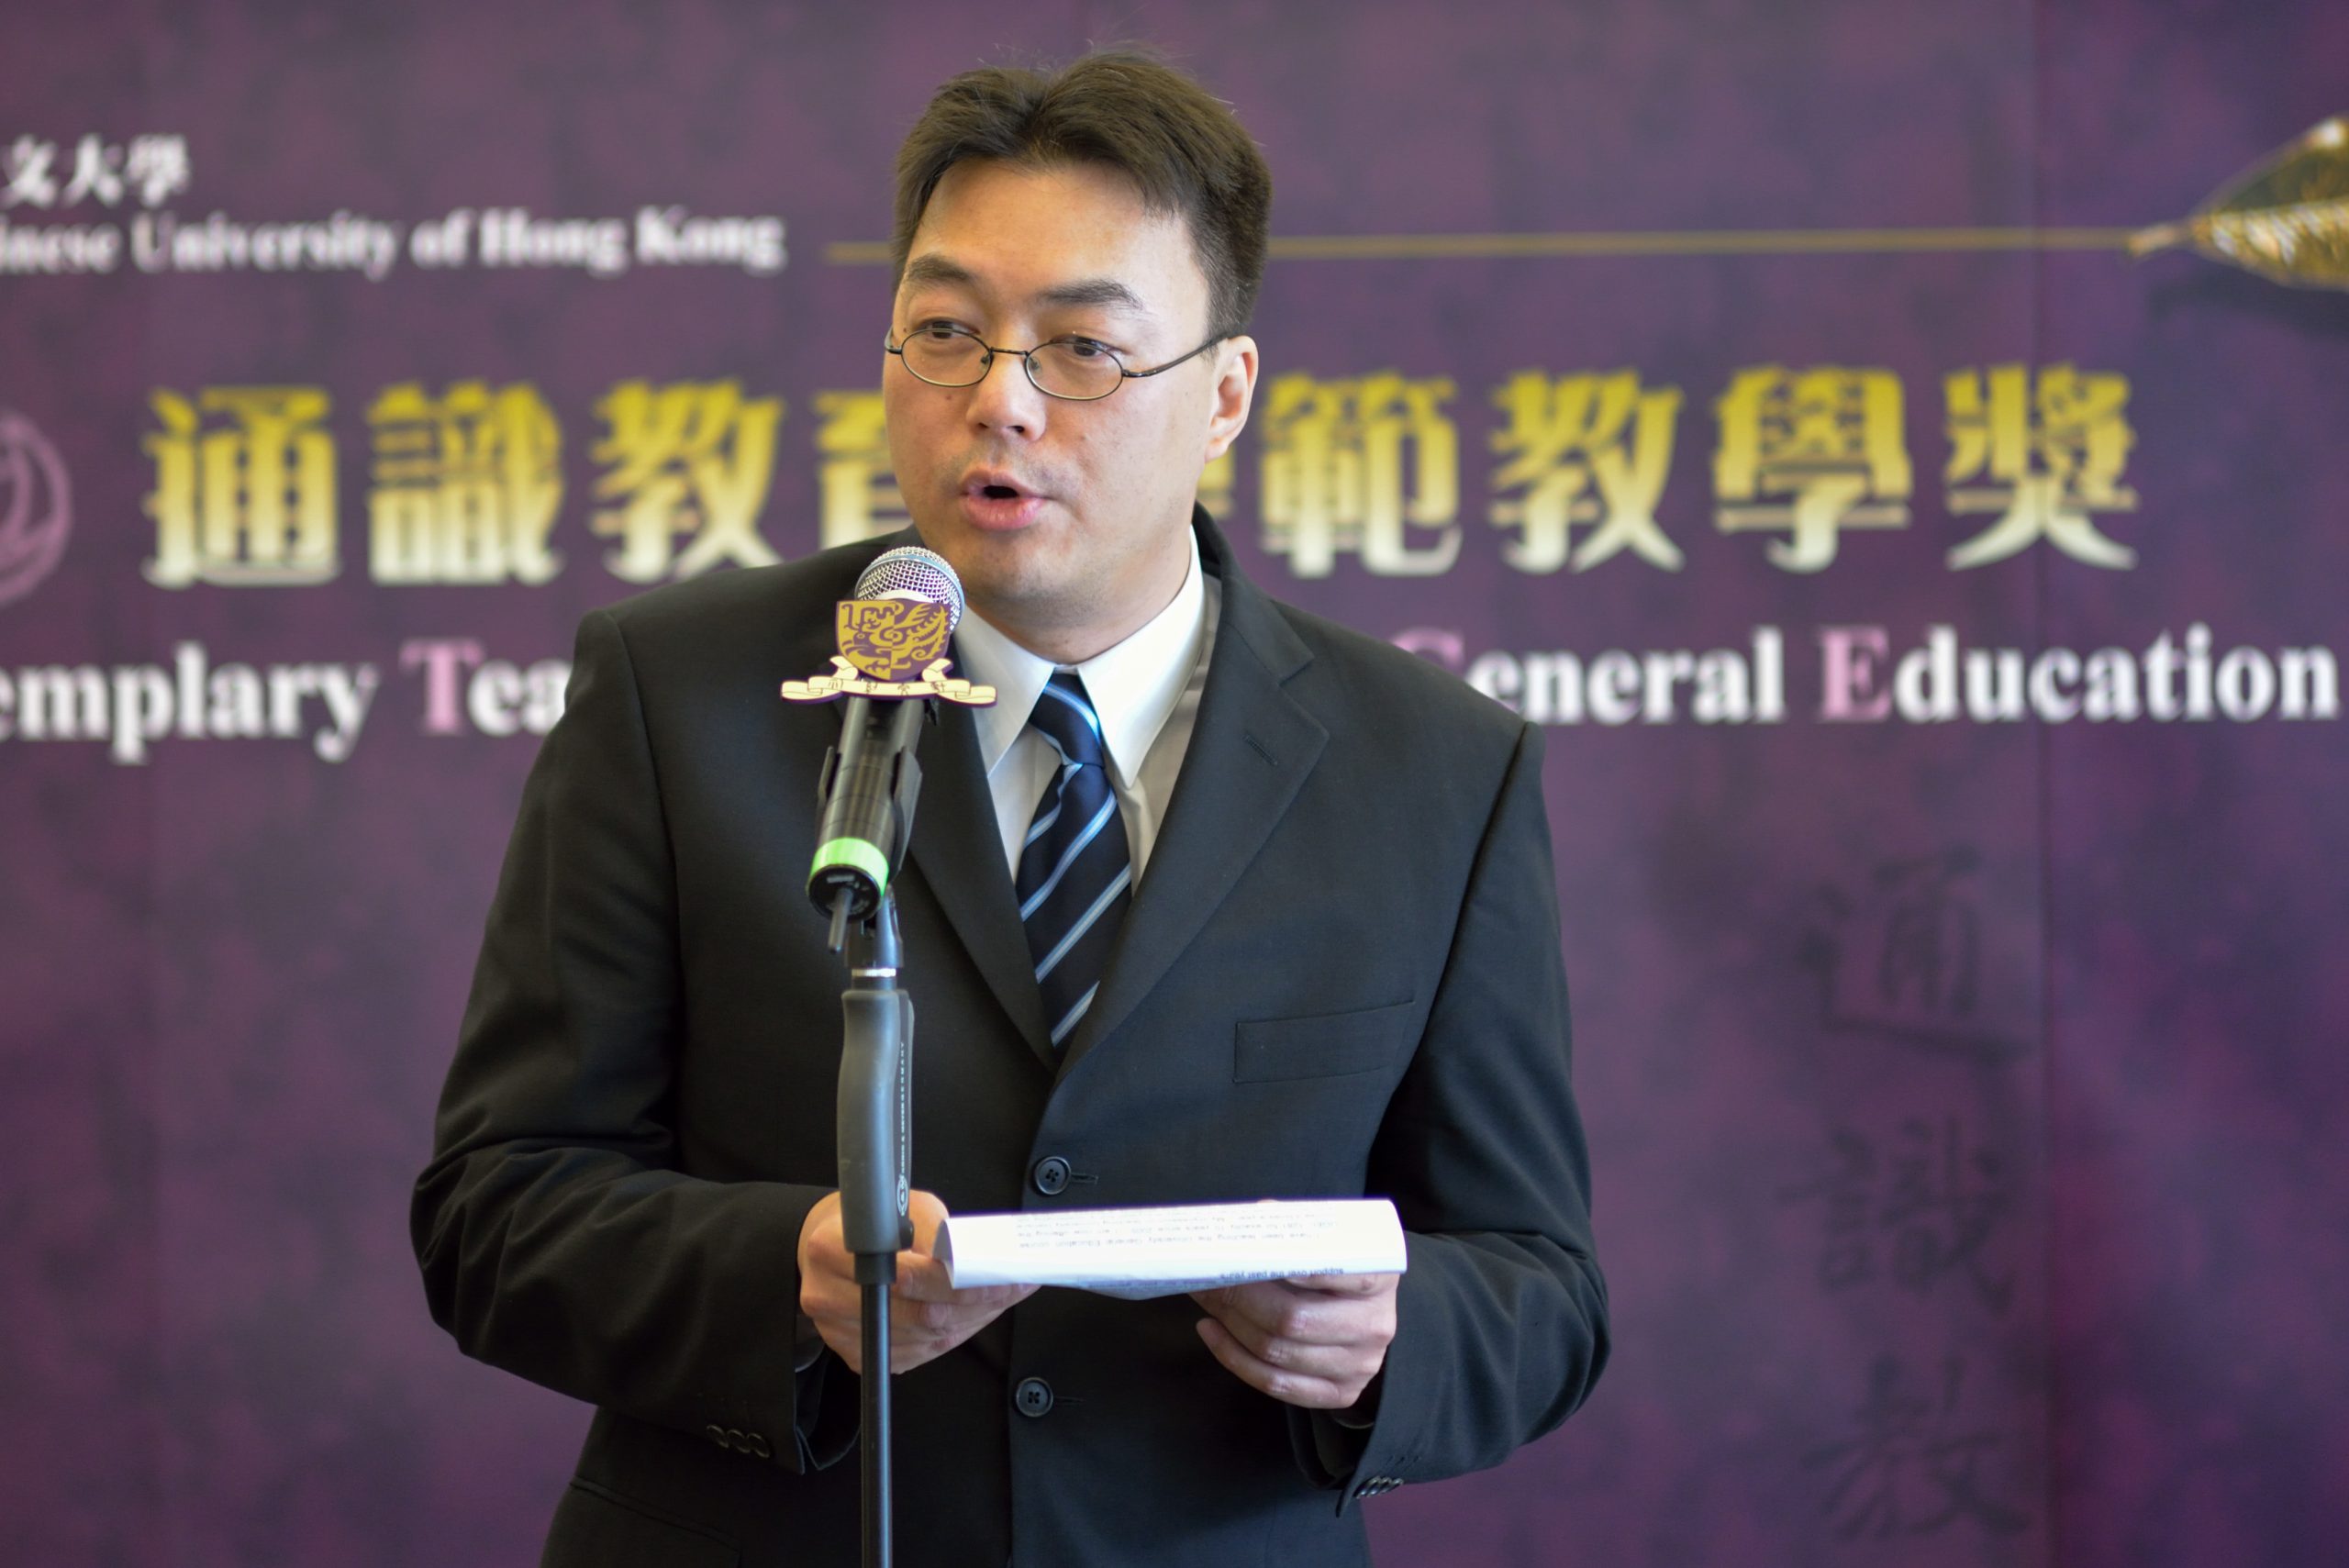 Speech by Professor Ho Chi Ming